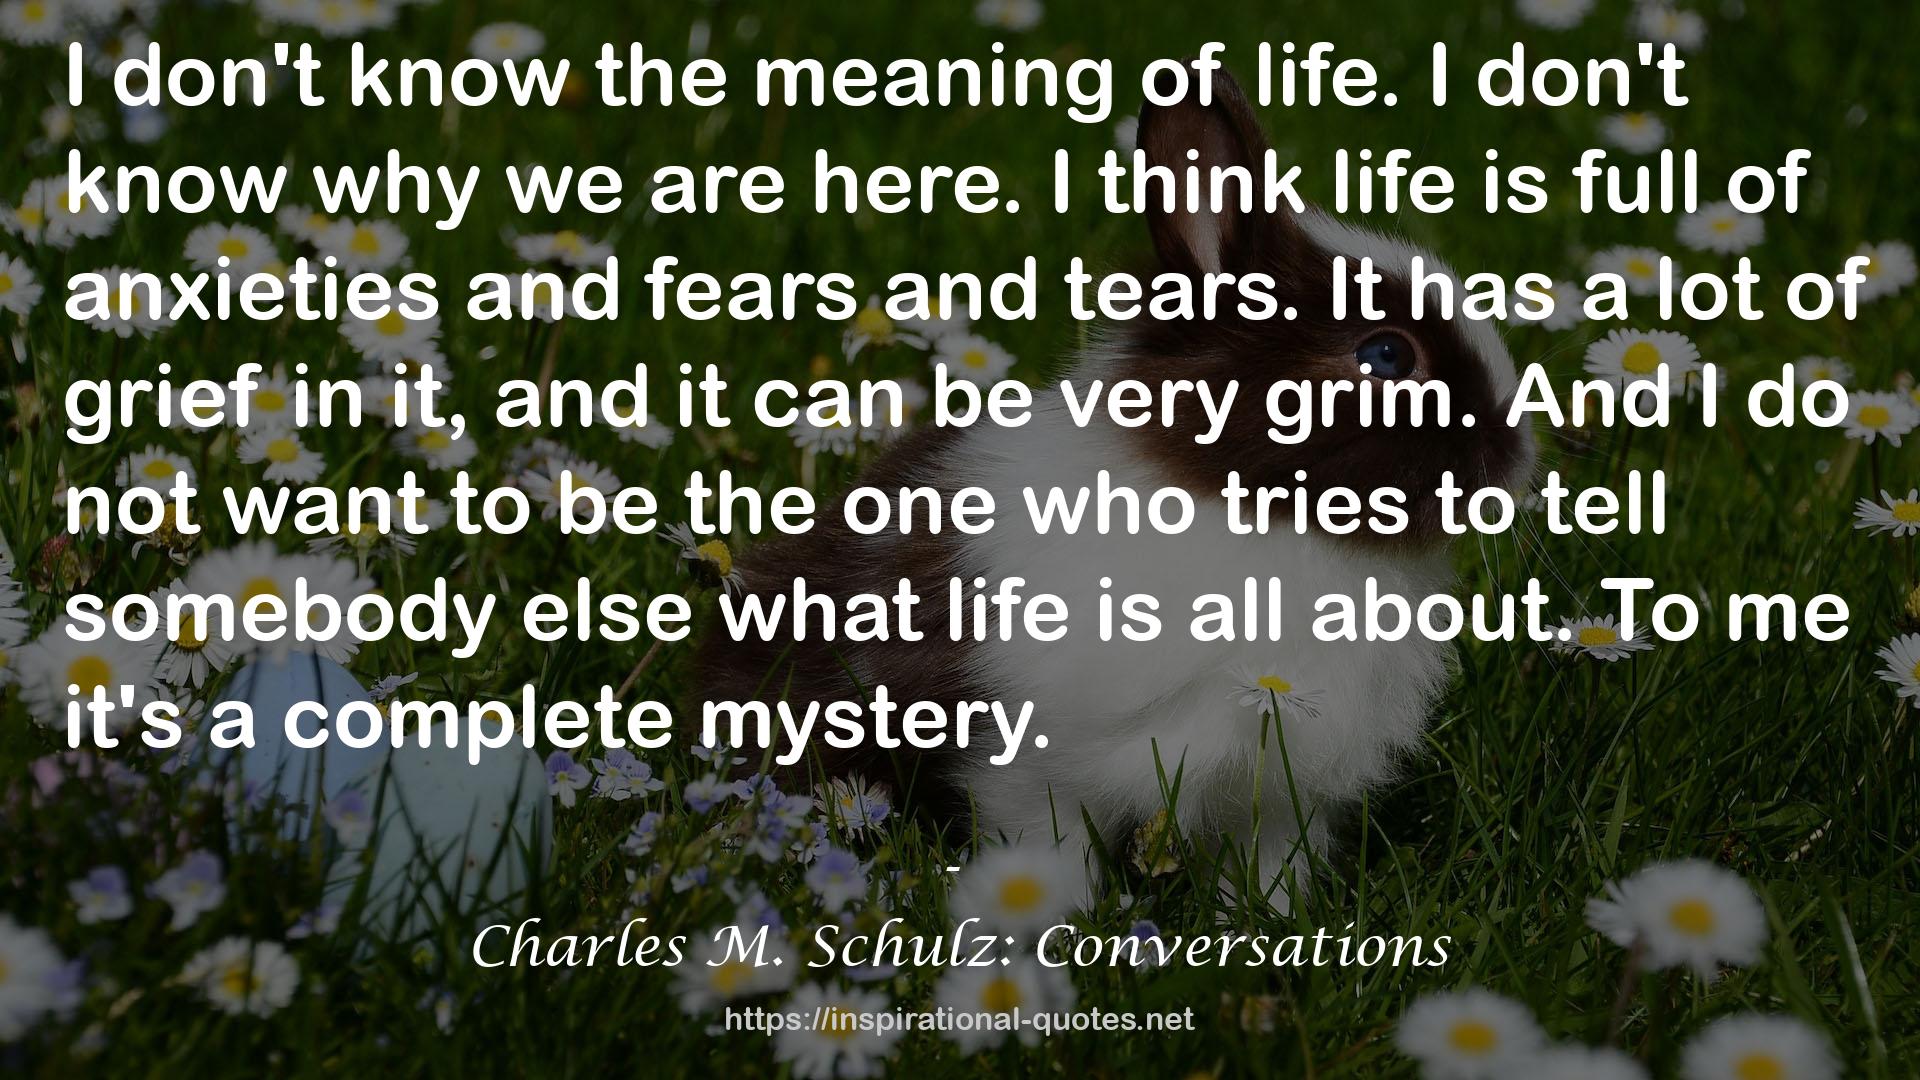 Charles M. Schulz: Conversations QUOTES